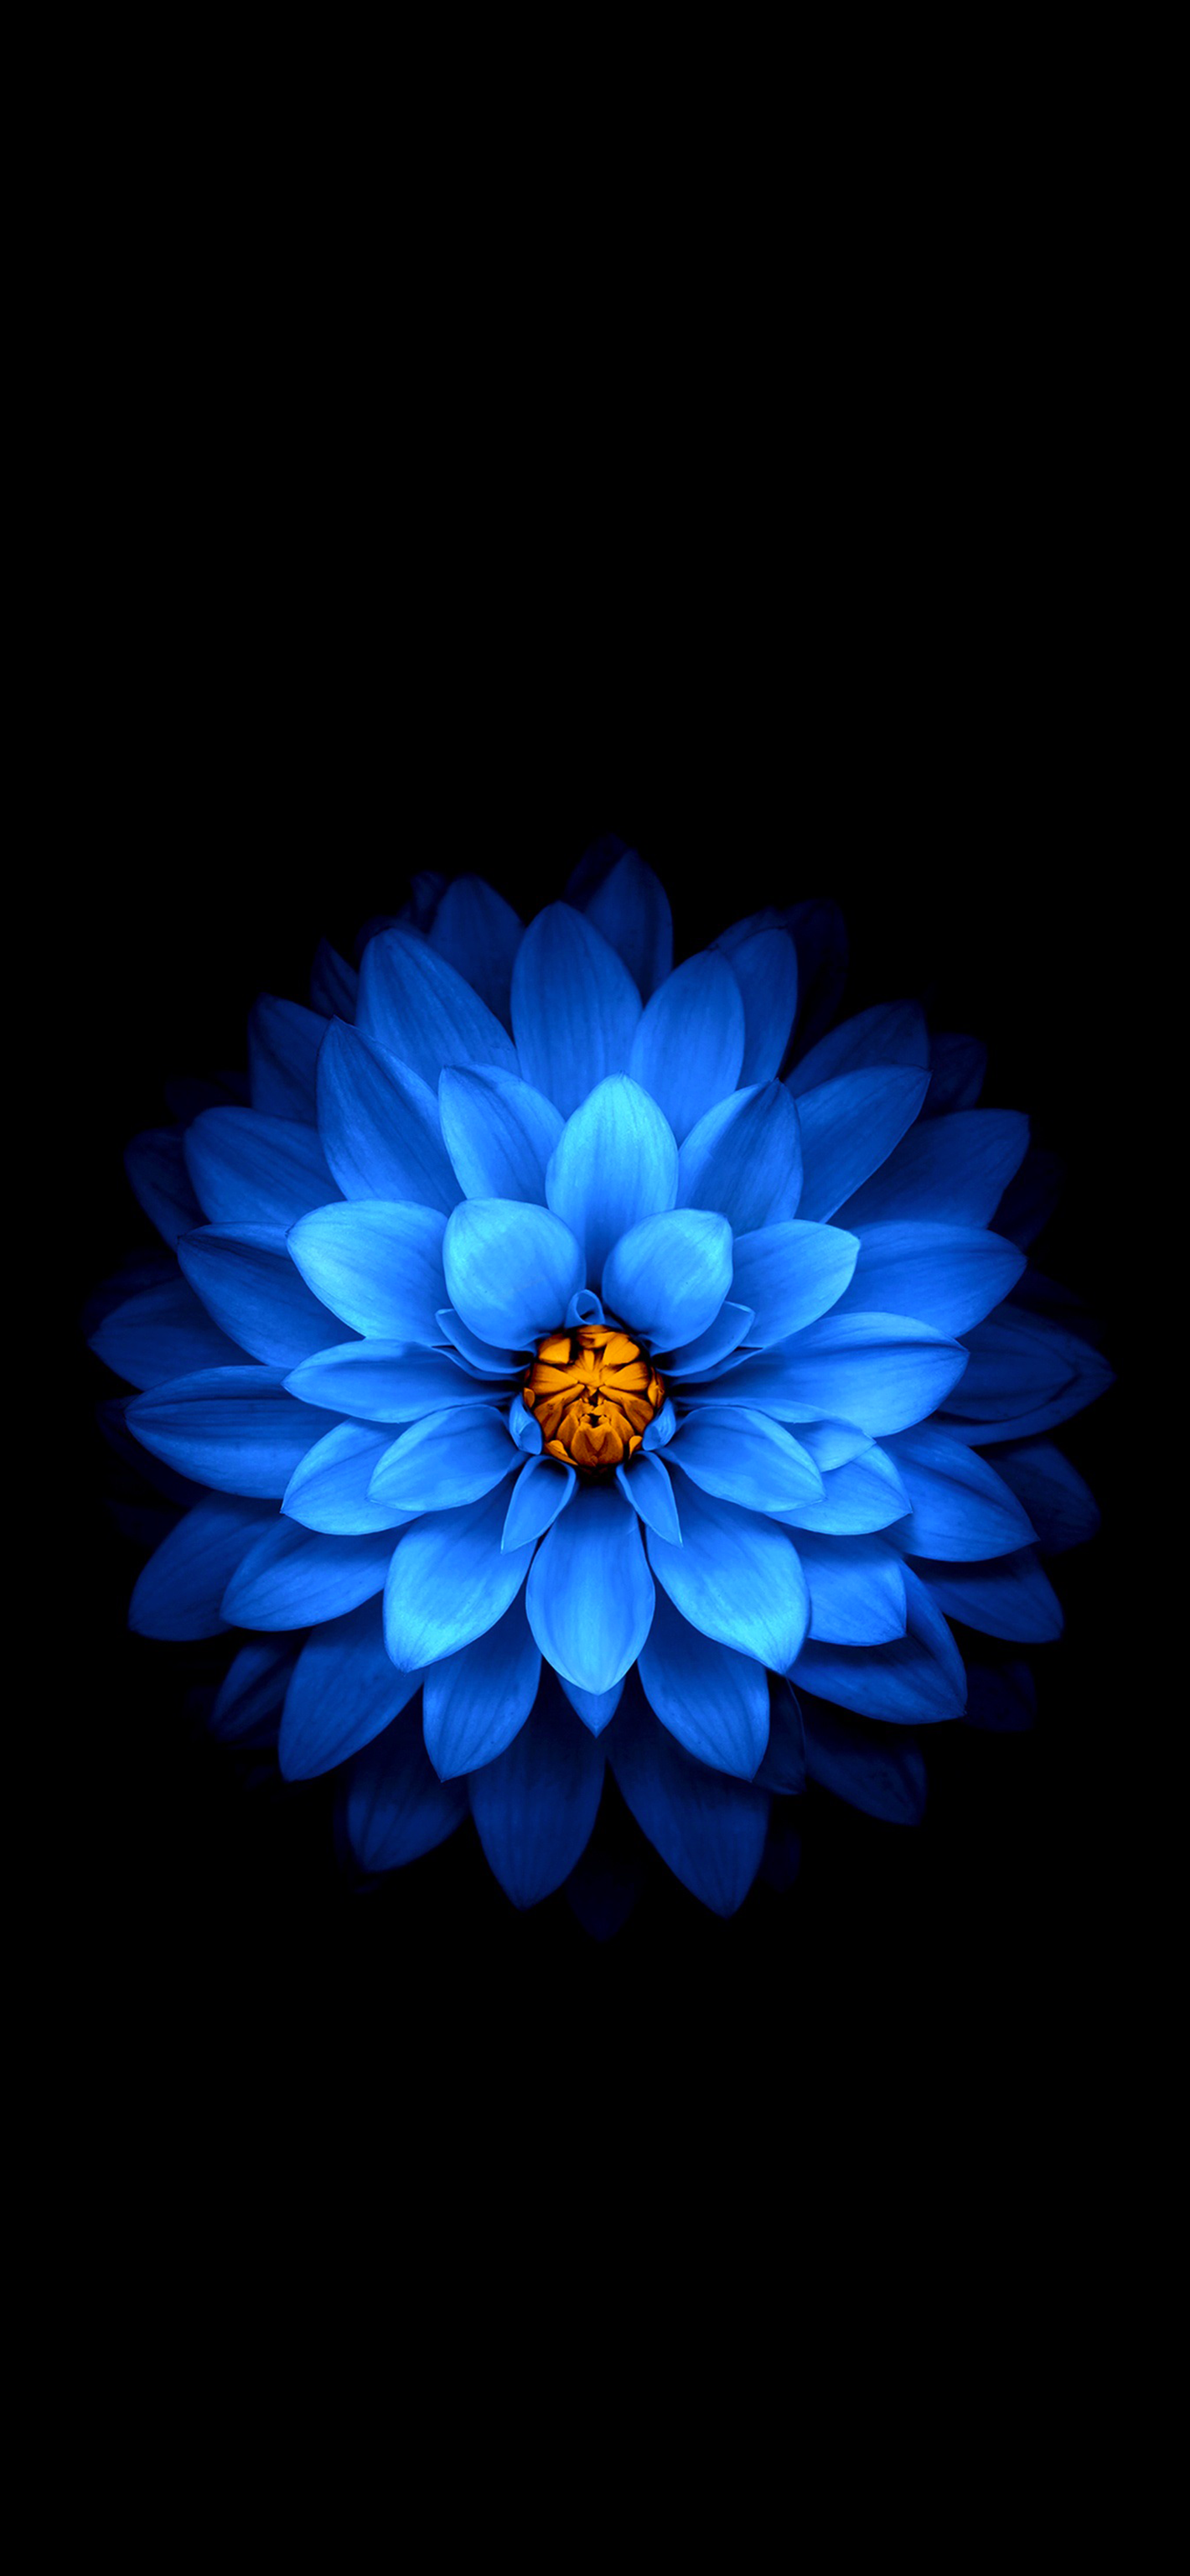 Blue Flower on Dark Background - Wallpapers Central